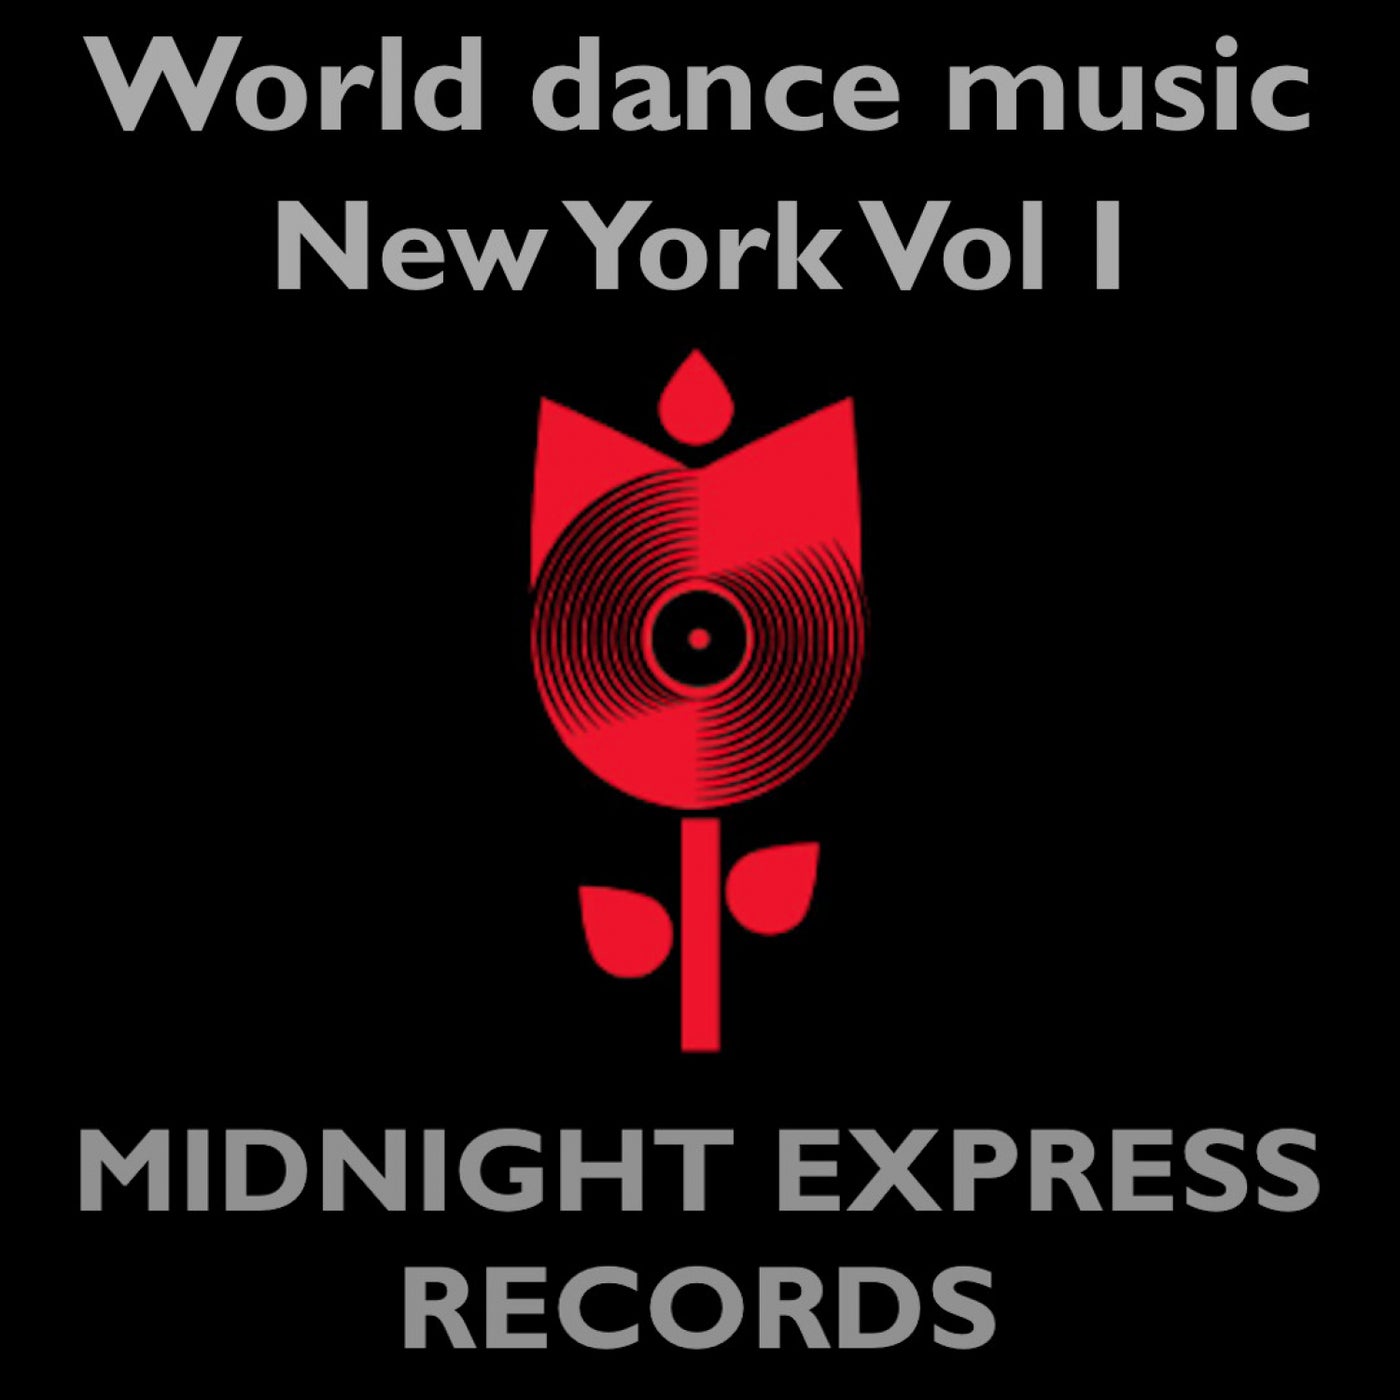 World dance music (New York VOL I)